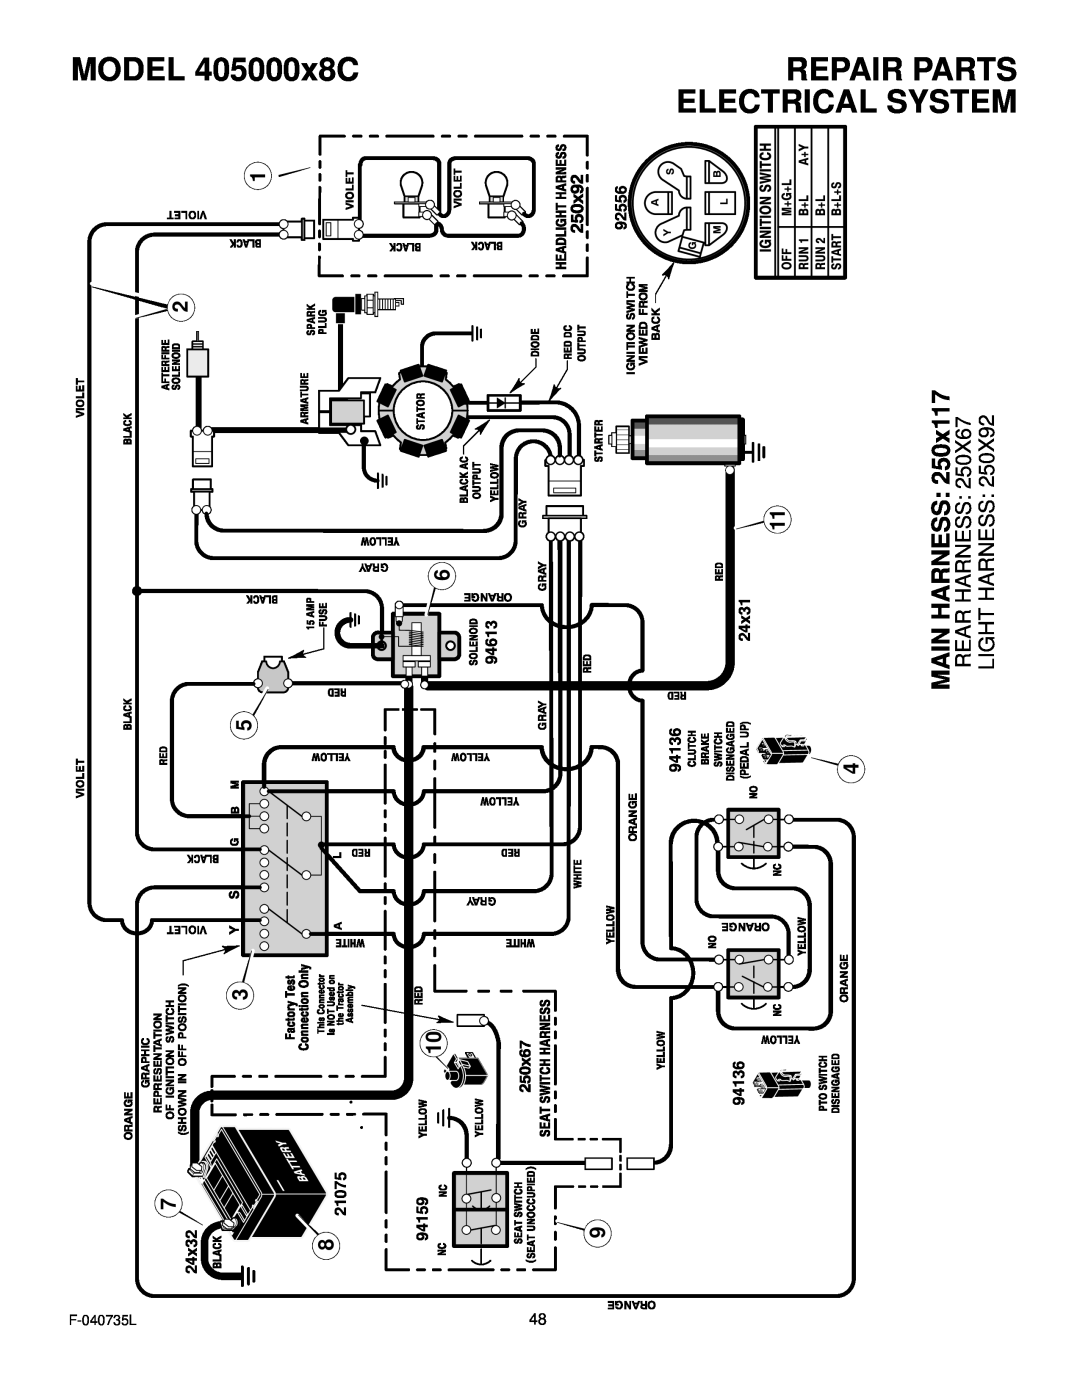 Murray manual Electrical System, MODEL 405000x8C, Repair Parts, Light Harness, MAIN HARNESS 250x117 REAR HARNESS 